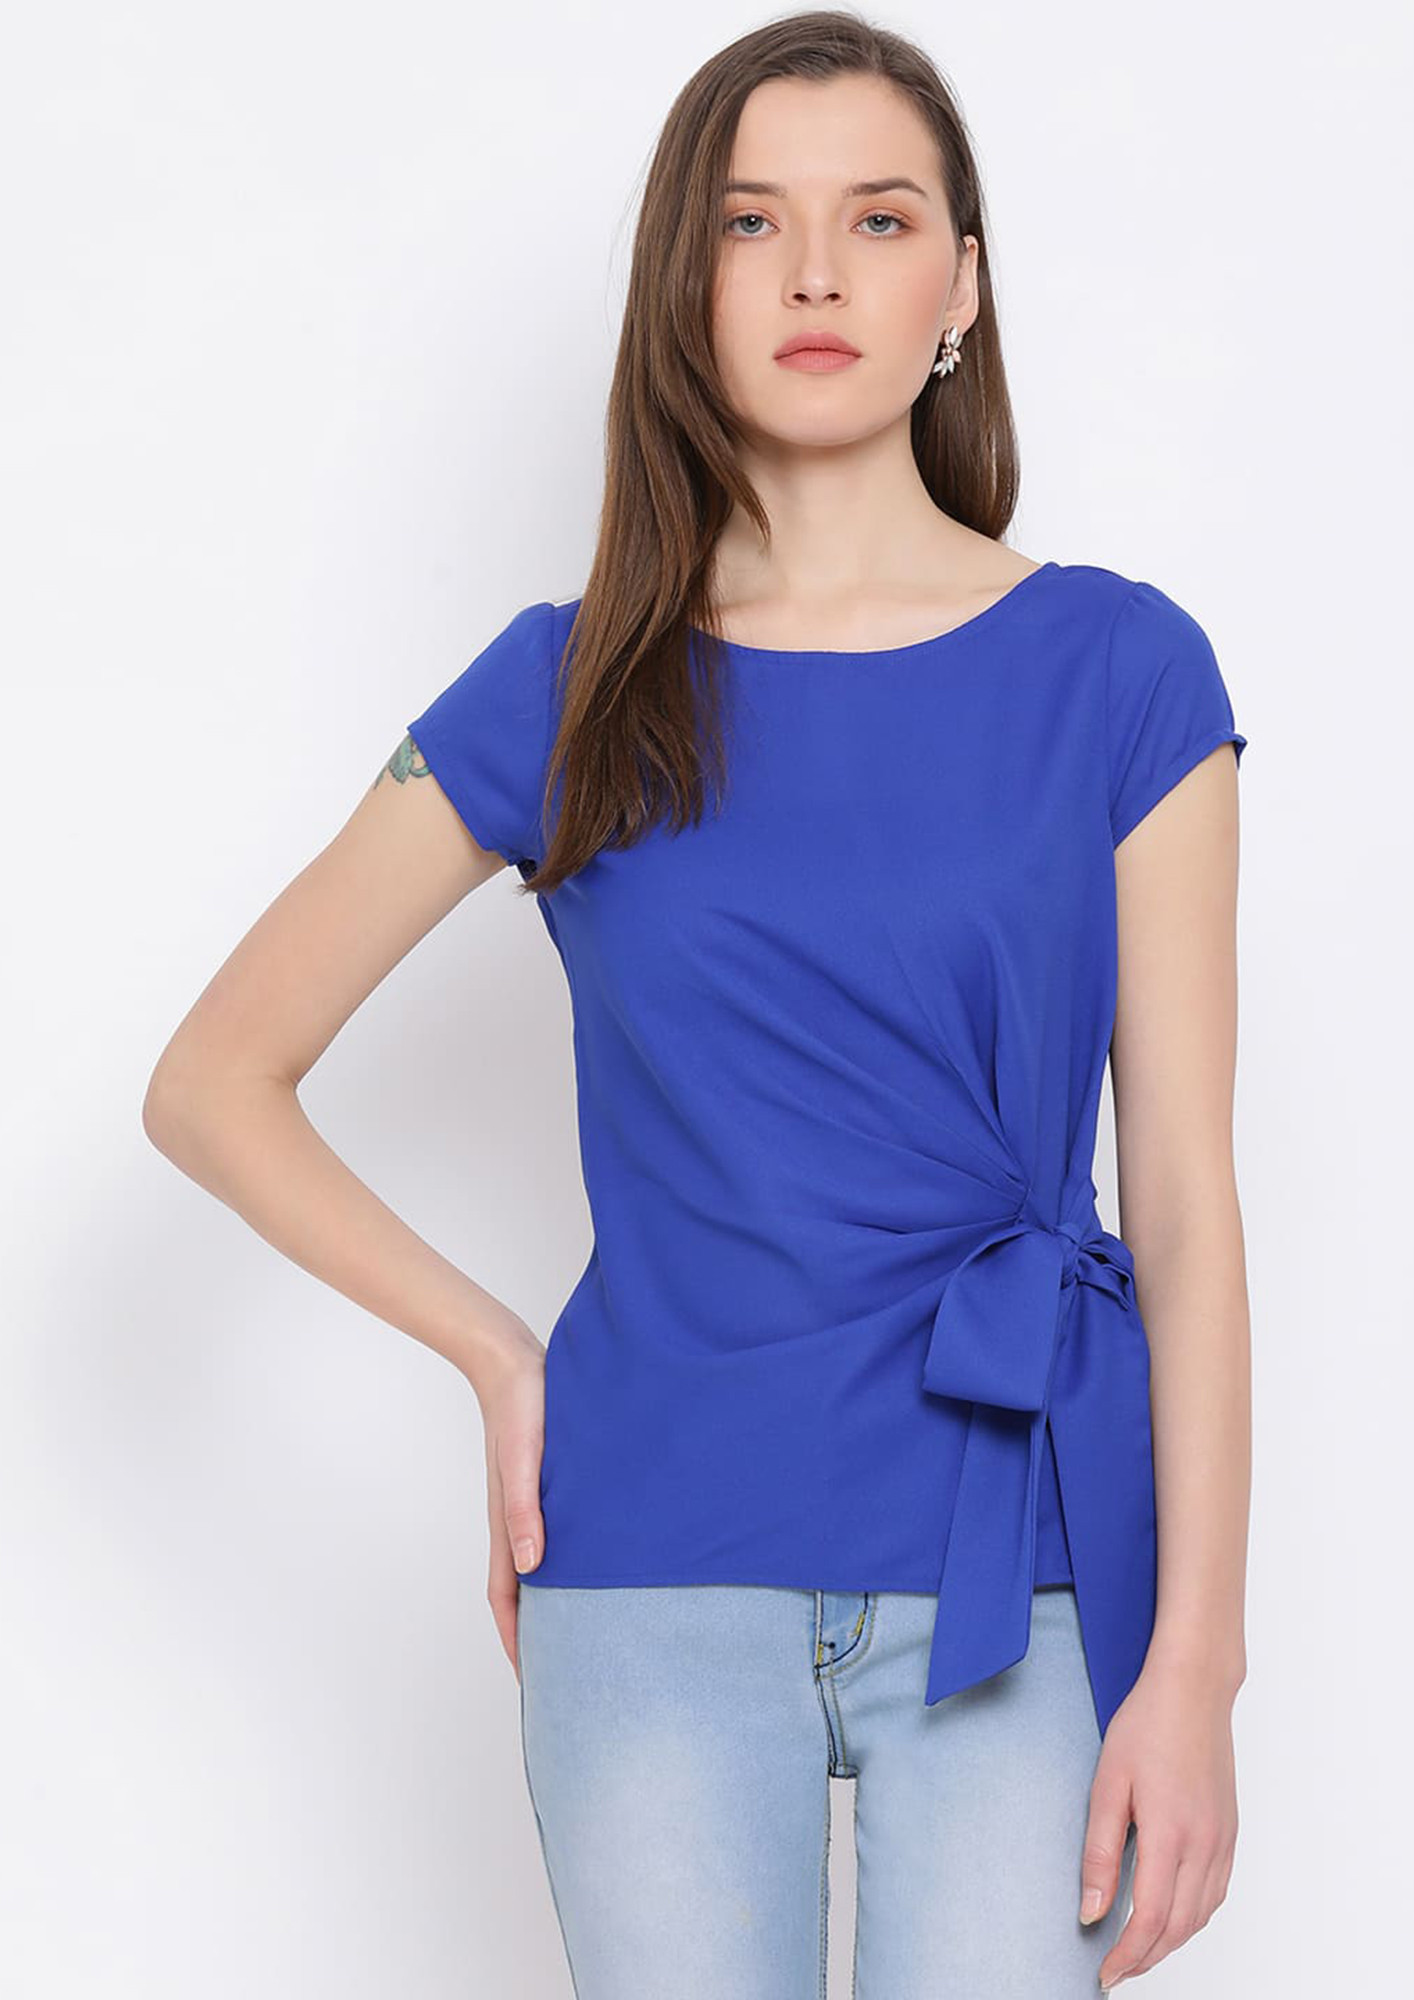 Draax Fashions Women Blue Solid Top